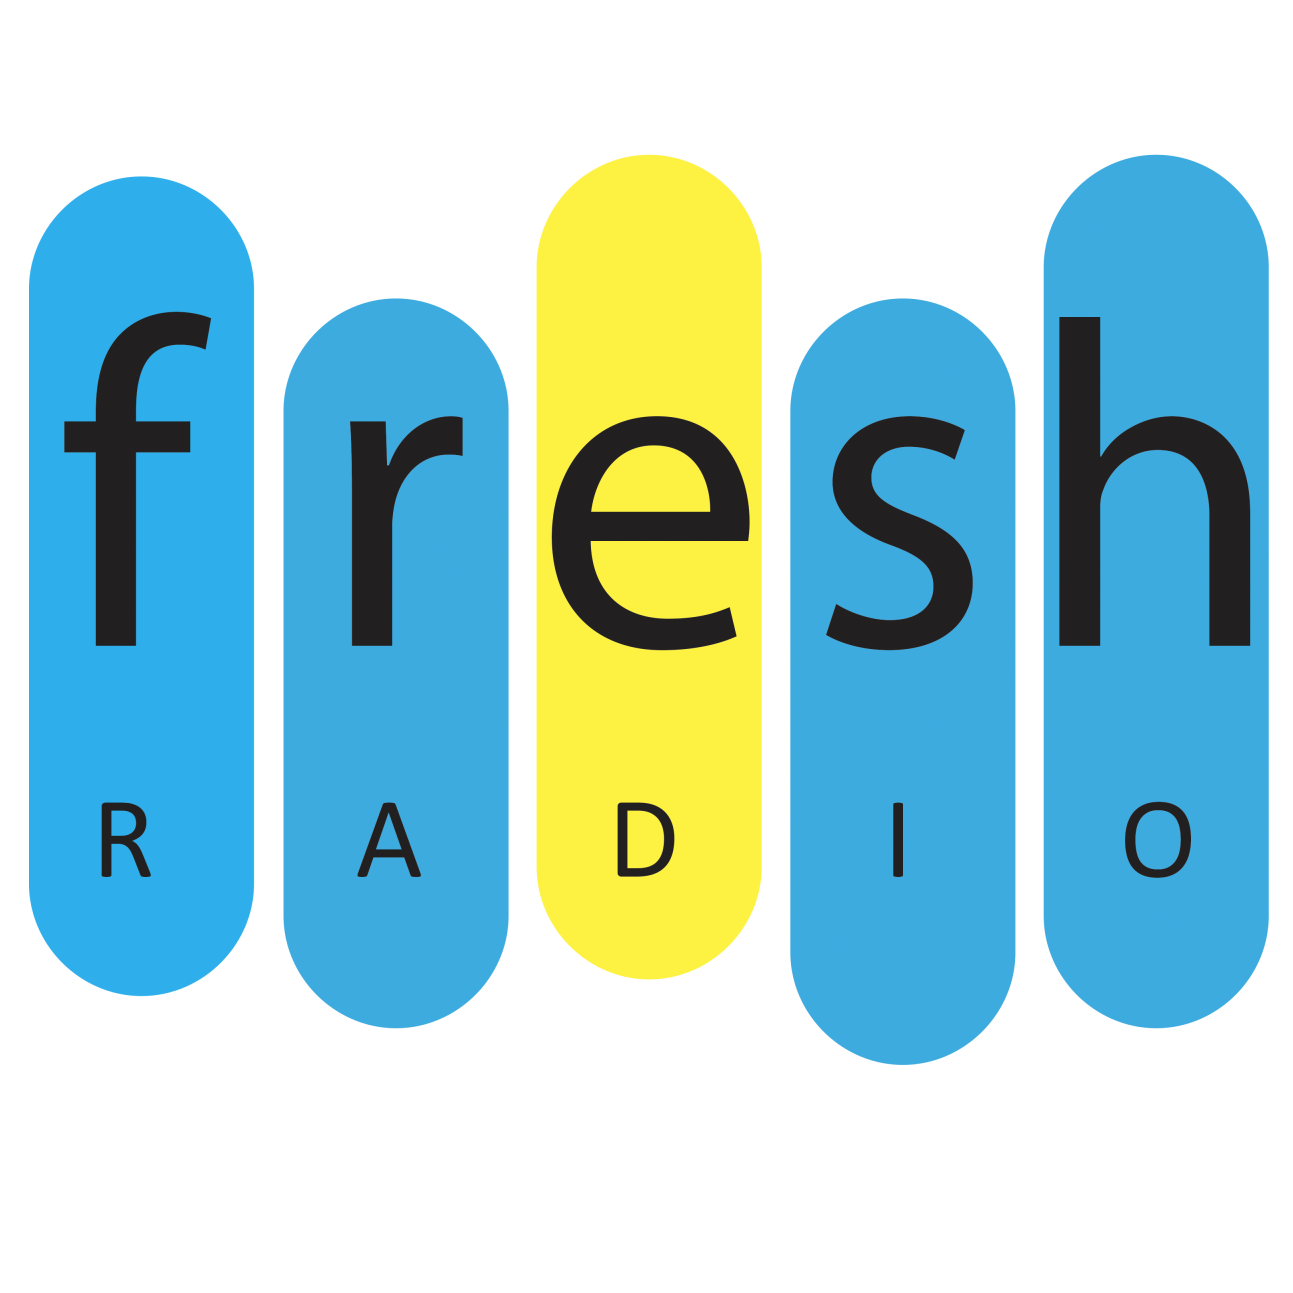 Fresh Radio Melbourne